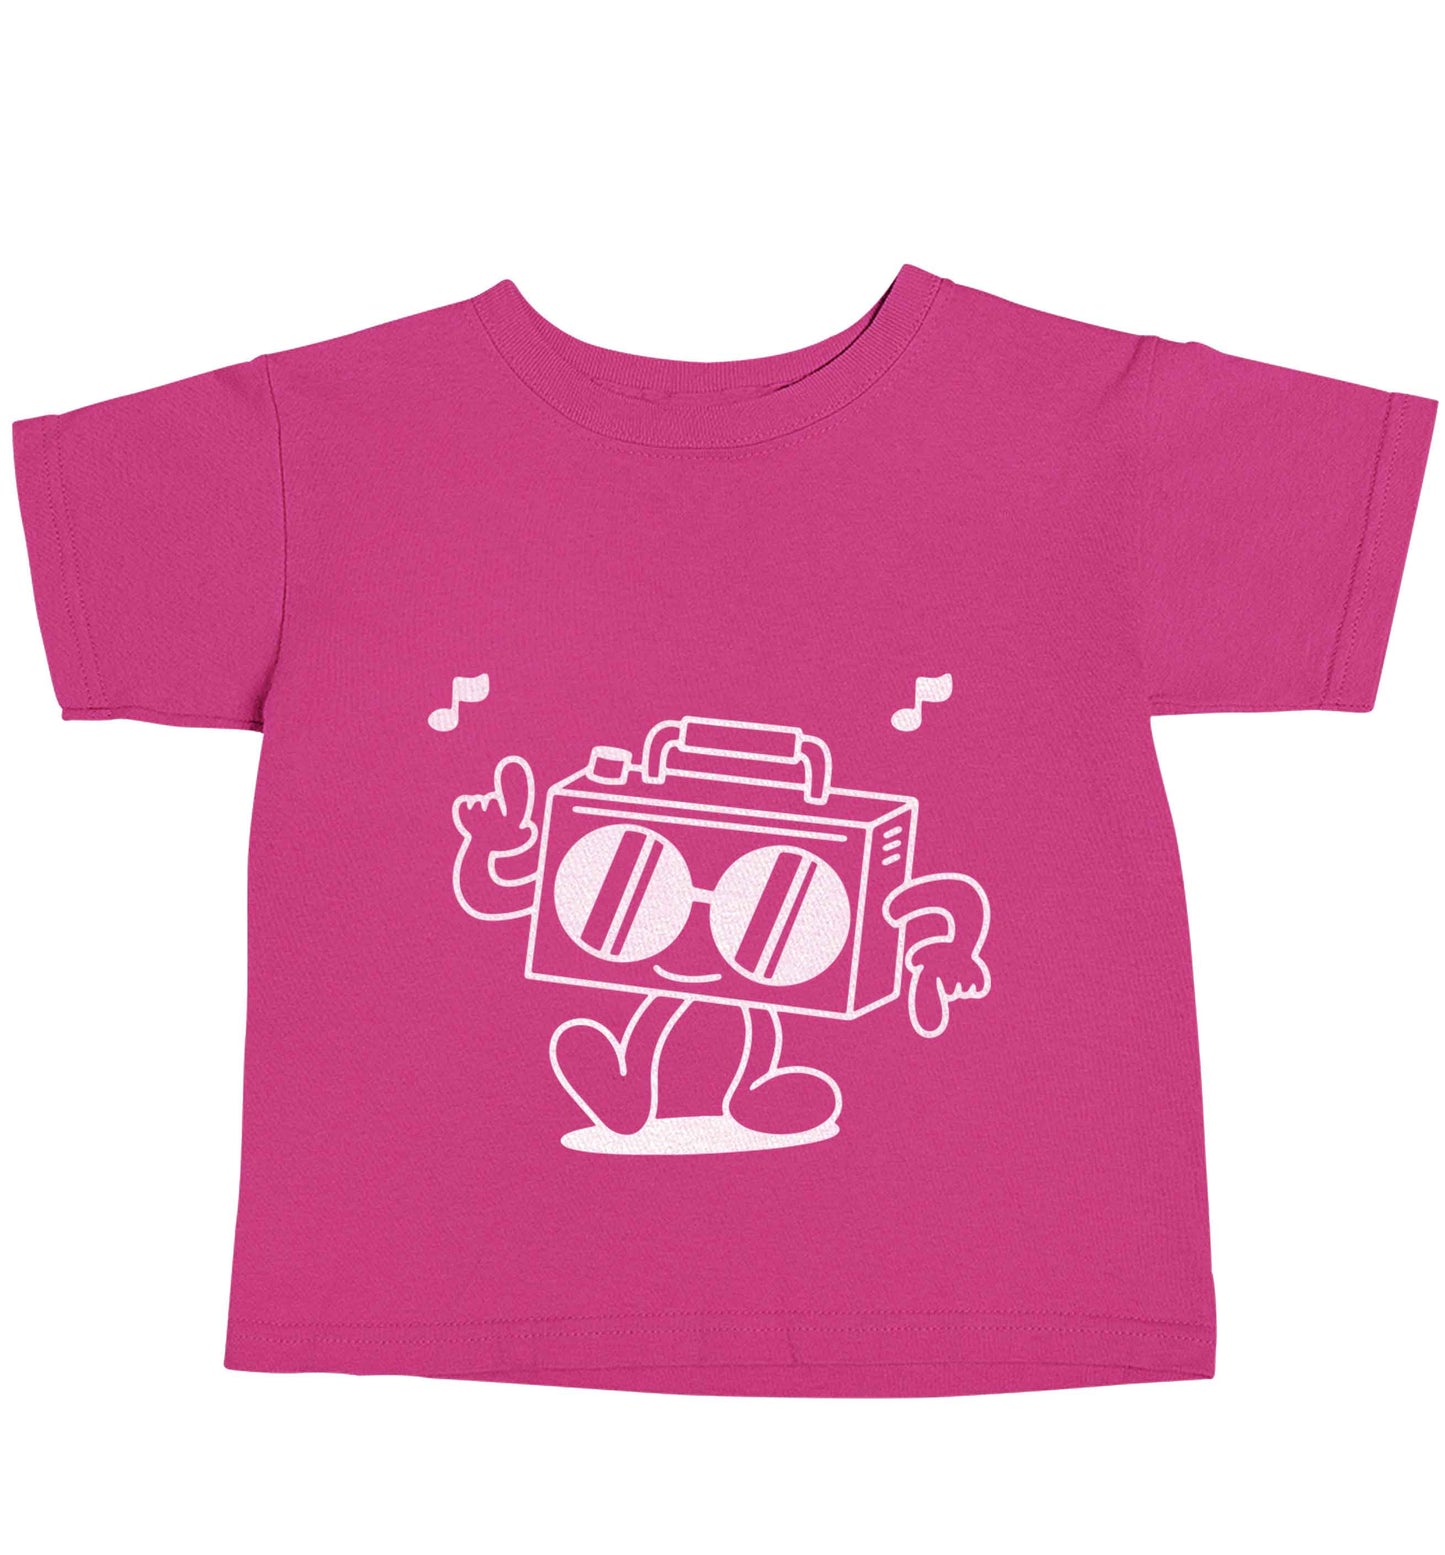 Boombox pink baby toddler Tshirt 2 Years